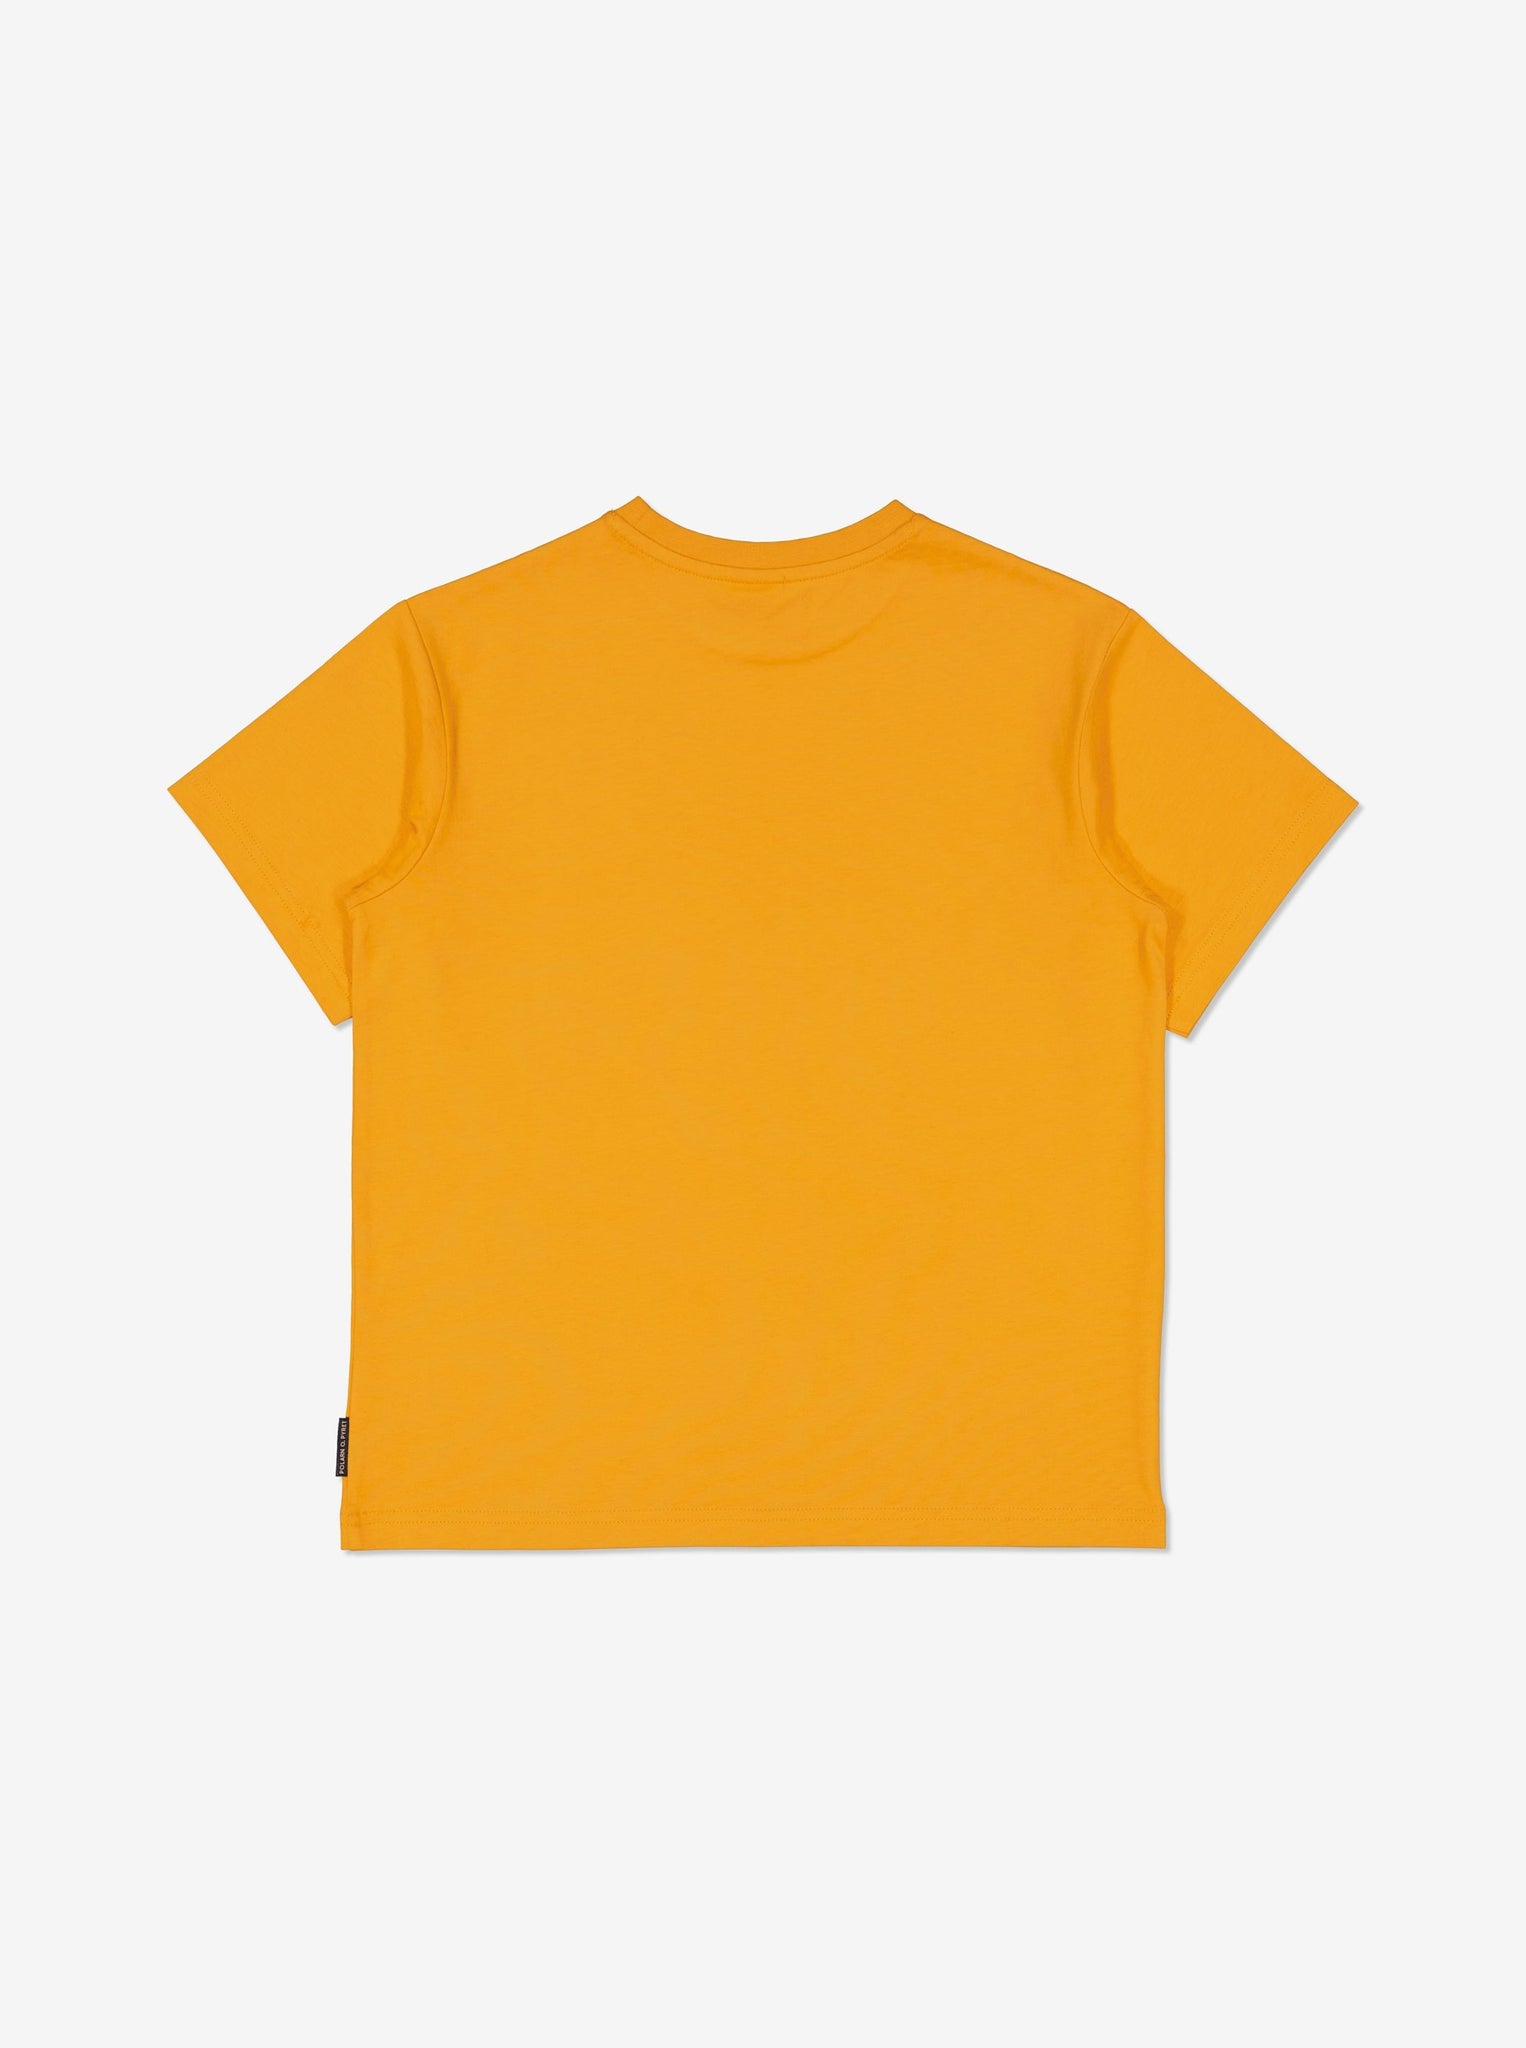  Yellow Skateboard Print Kids T-Shirt from Polarn O. Pyret Kidswear. Made using environmentally friendly materials.